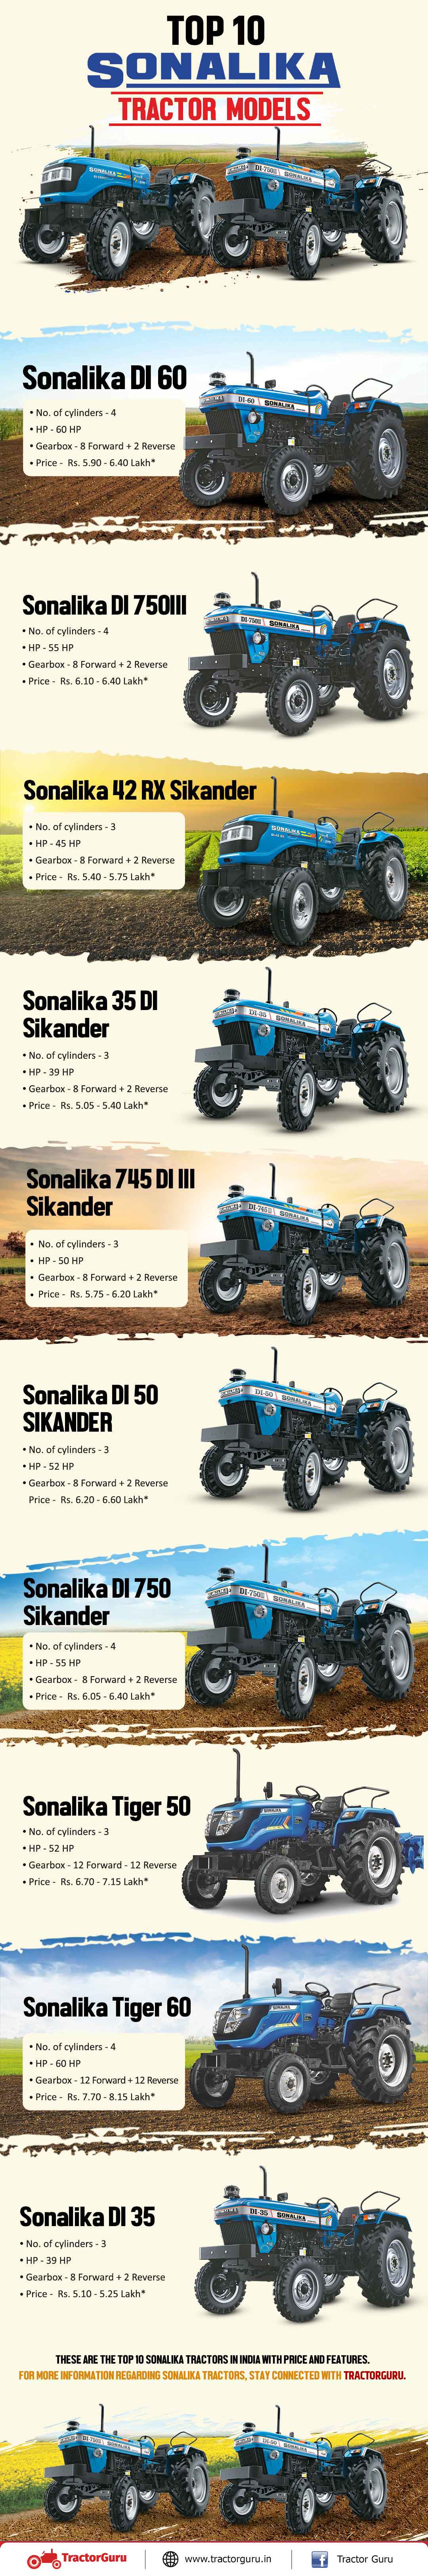 Top 10 Sonalika Tractor Models